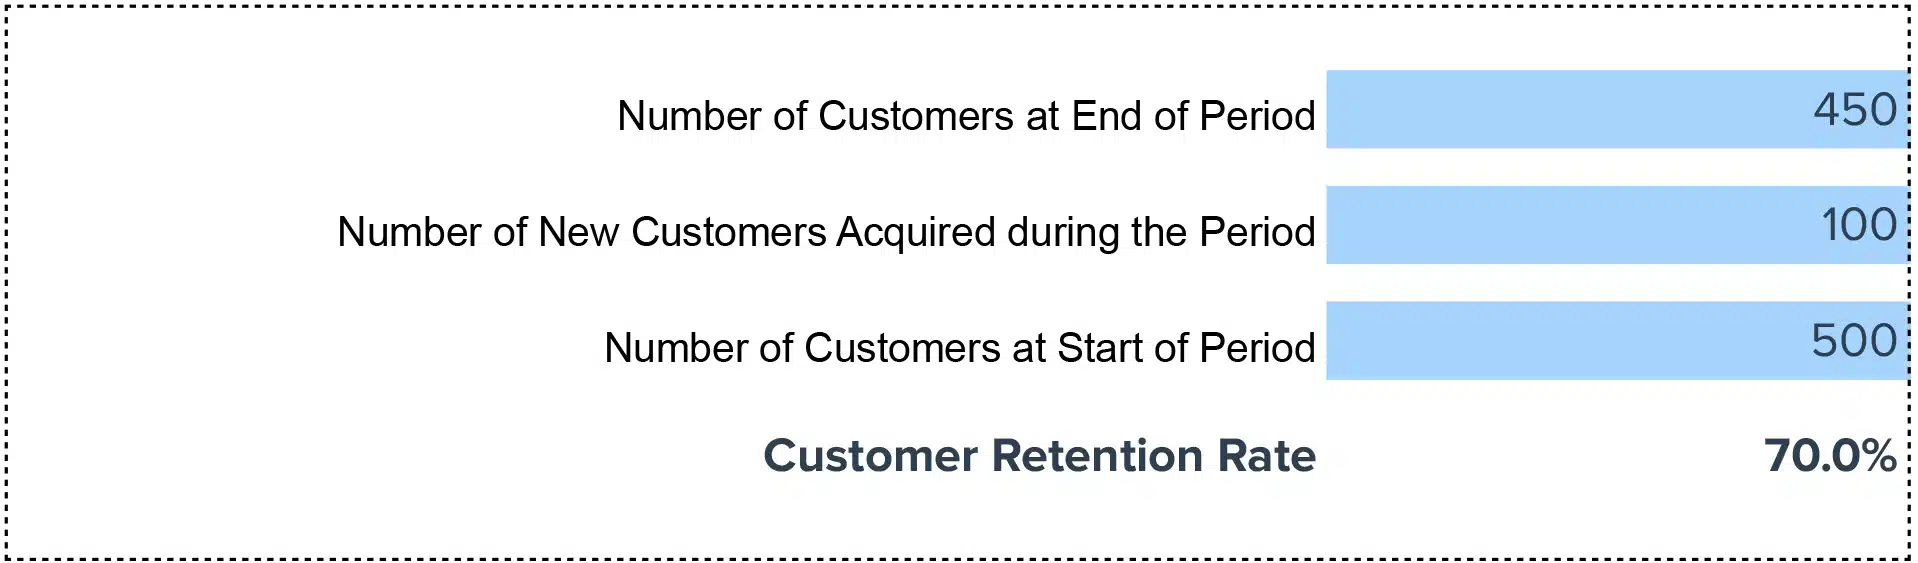 Customer Retention Rate